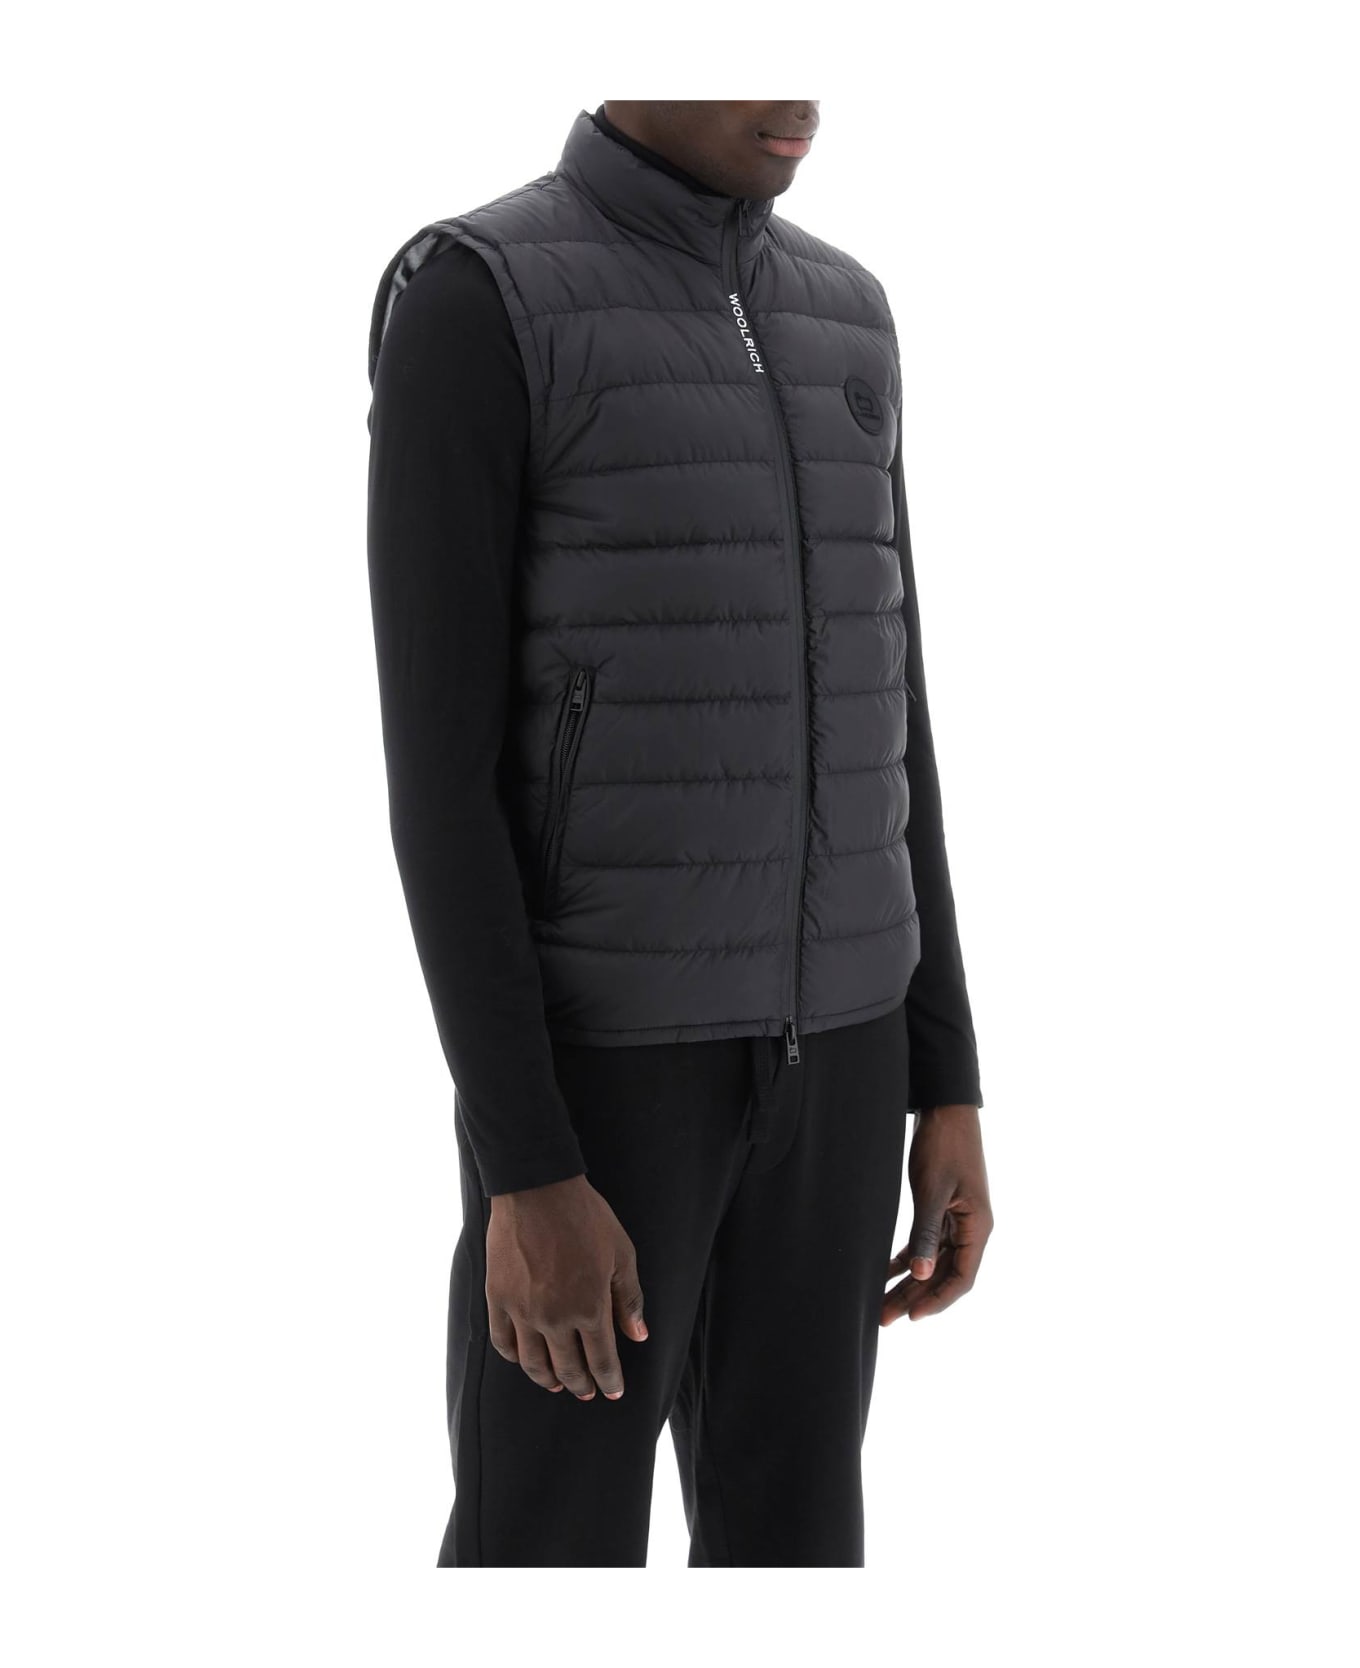 Woolrich Sundance Bodywarmer Jacket - black